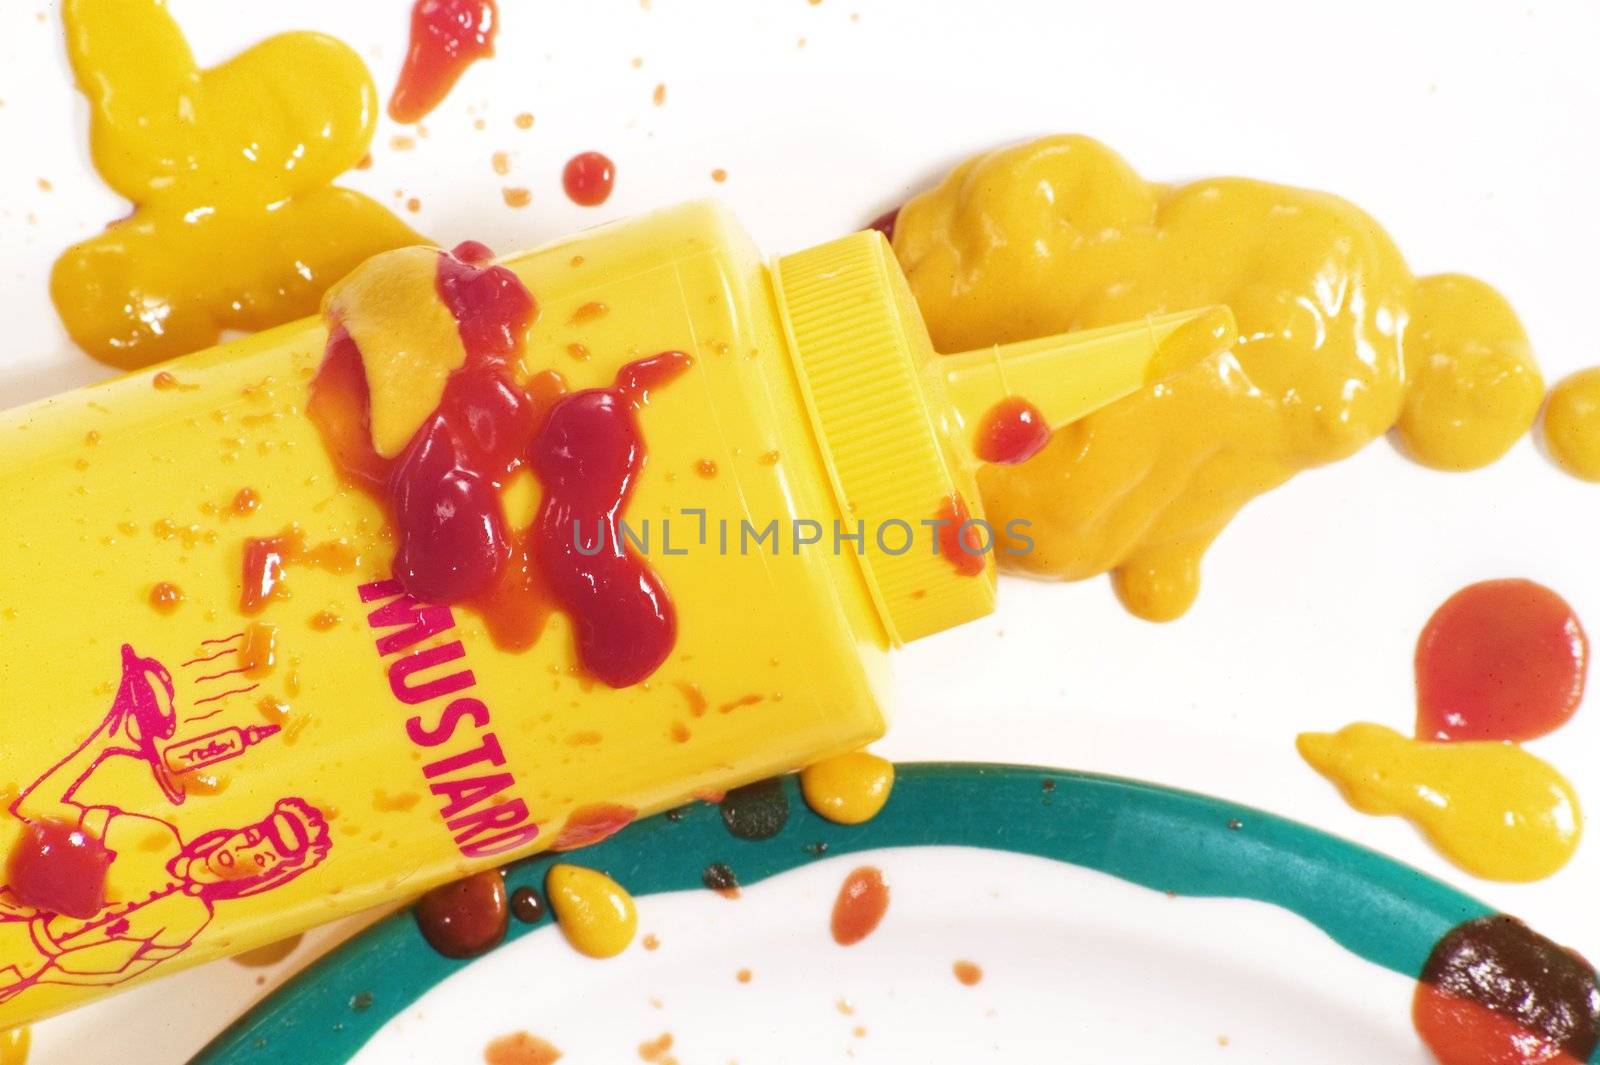 Mustard Mess by Creatista